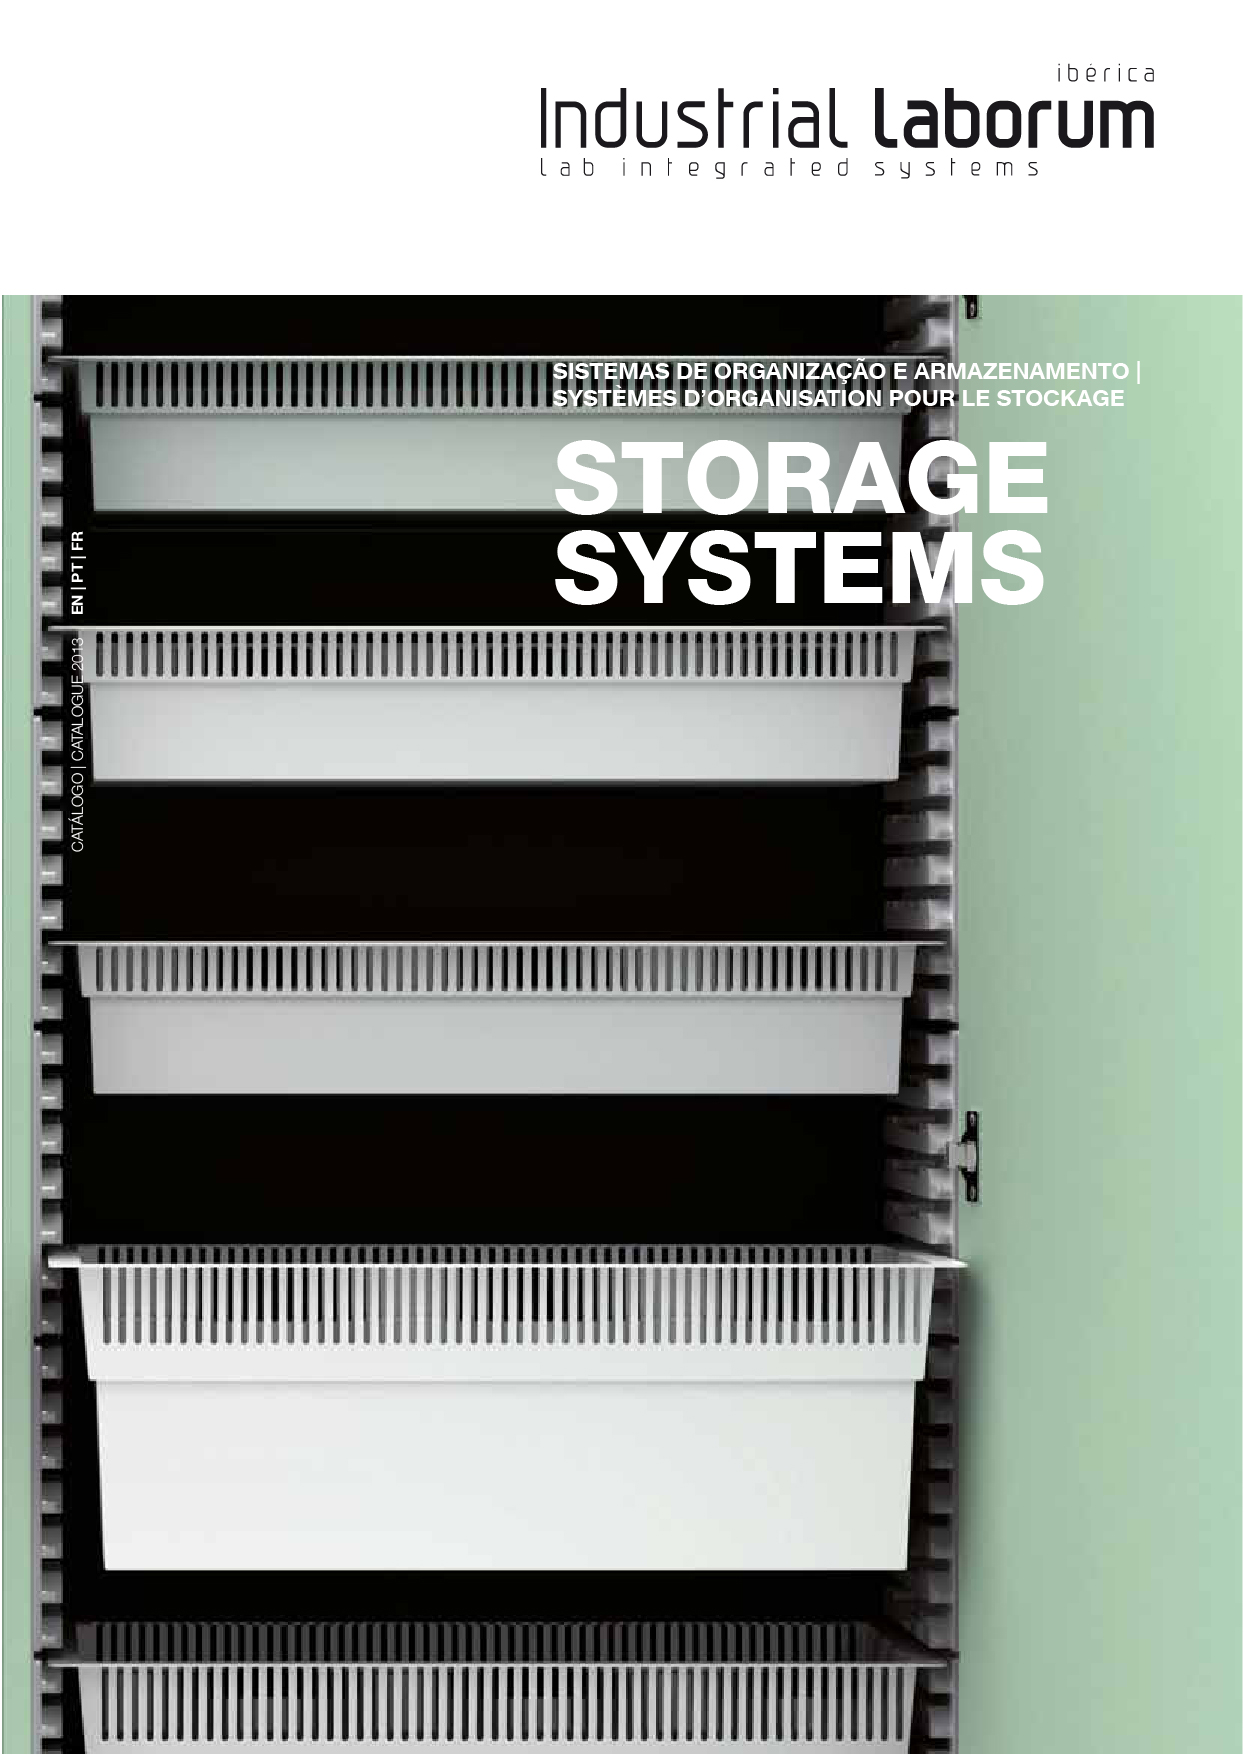 Catalog Organization and Storage Systems